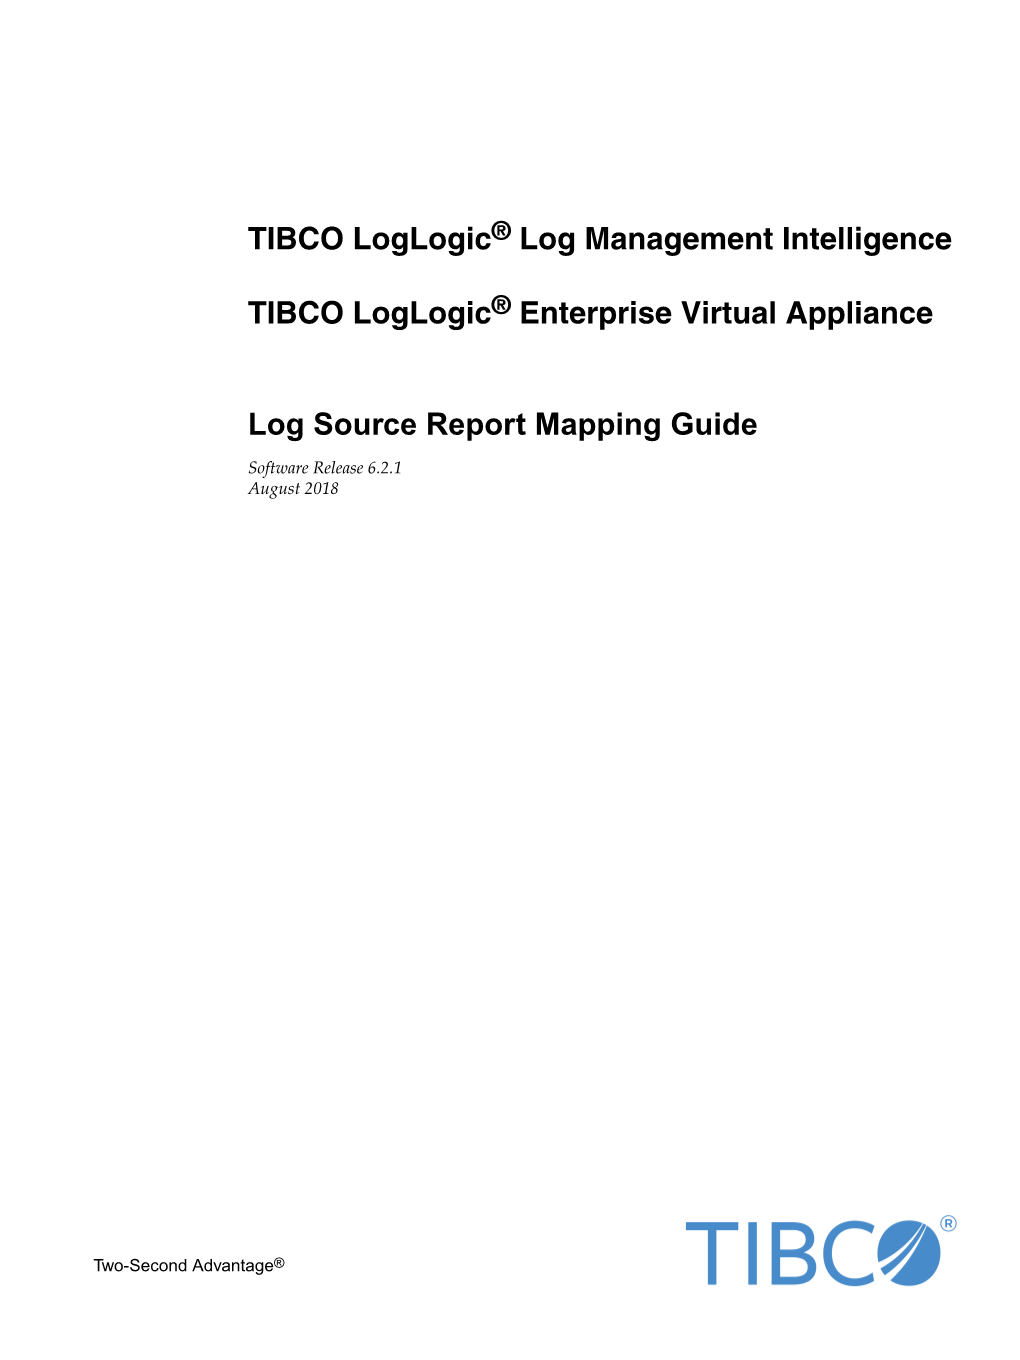 Enterprise Virtual Appliance Log Source Report Mapping Guide